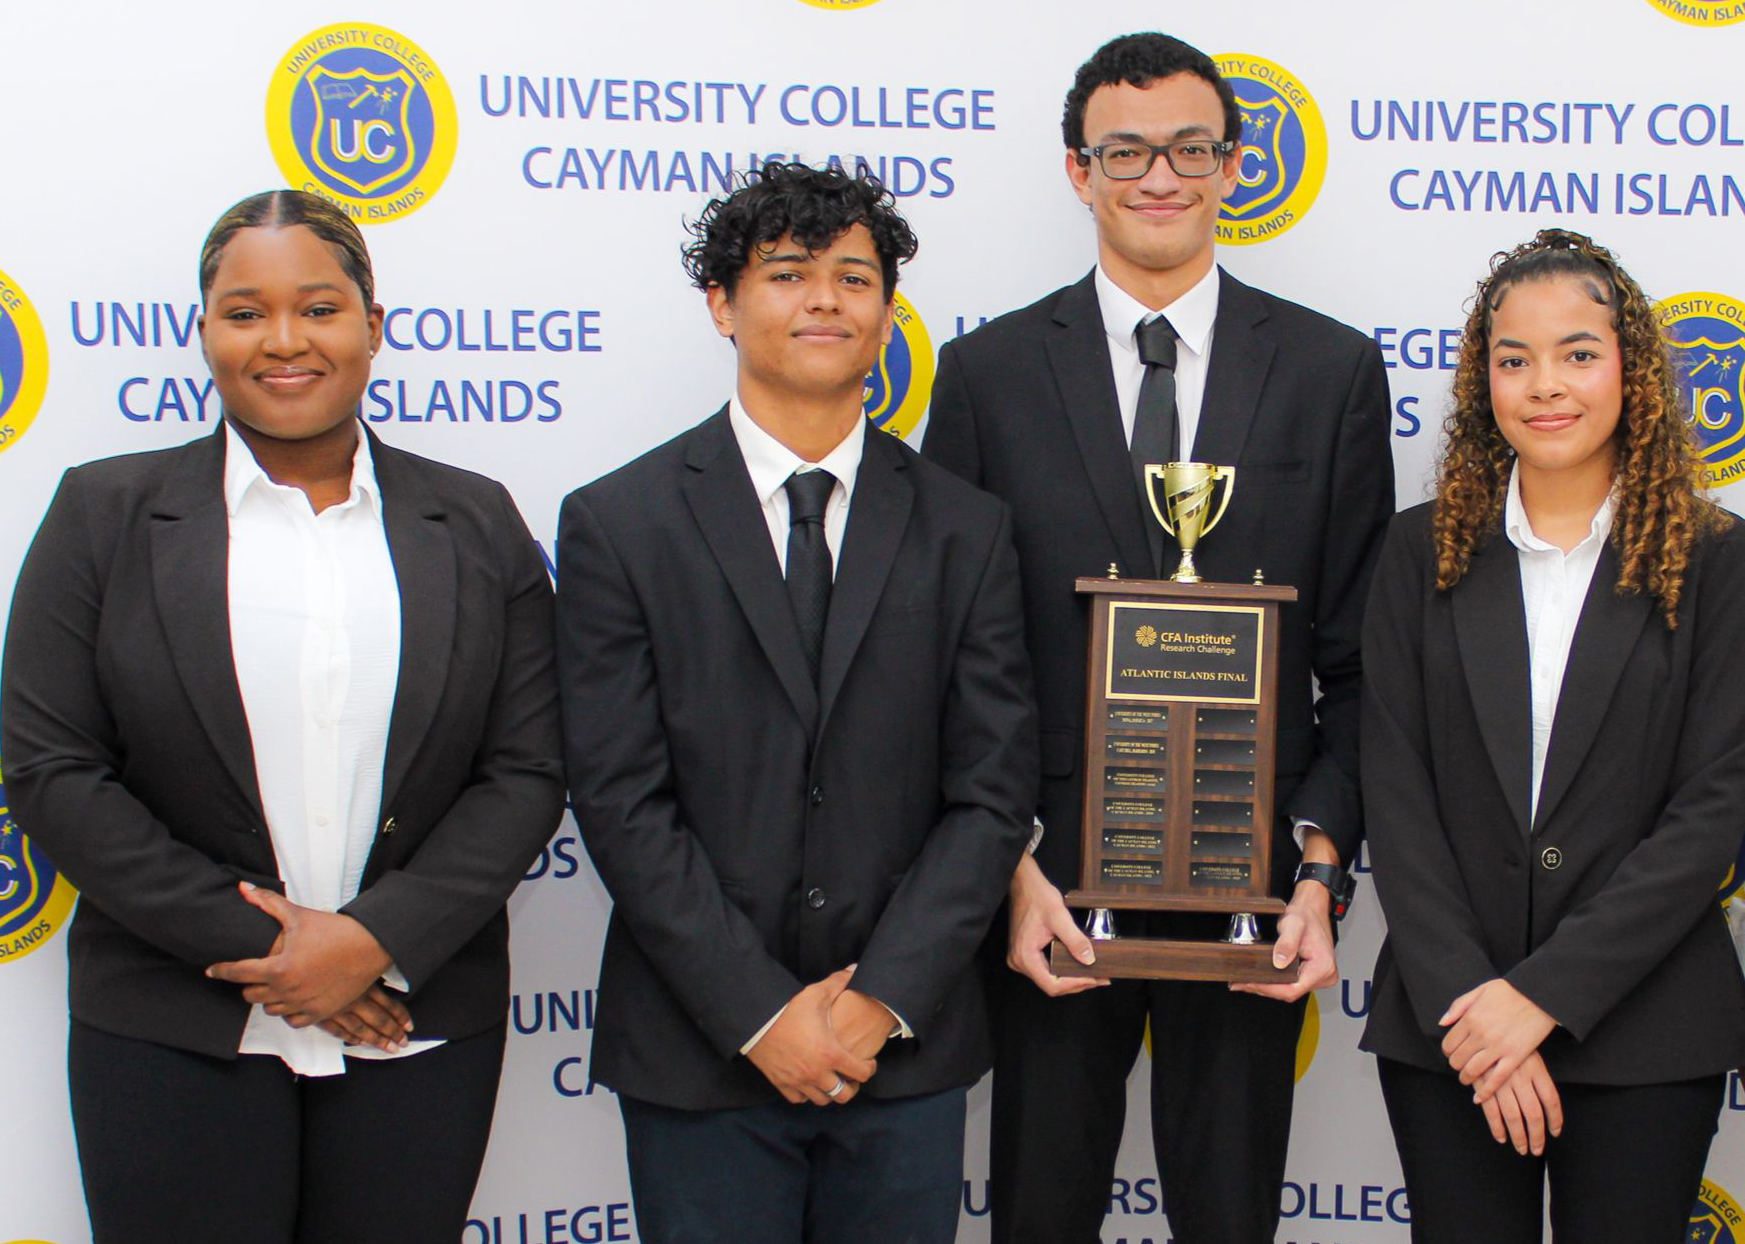 The winning UCCI student team: Chantae Pryce, Chad Powell, Zeb Yanes-Bush (Team Captain) and Britney Bush.